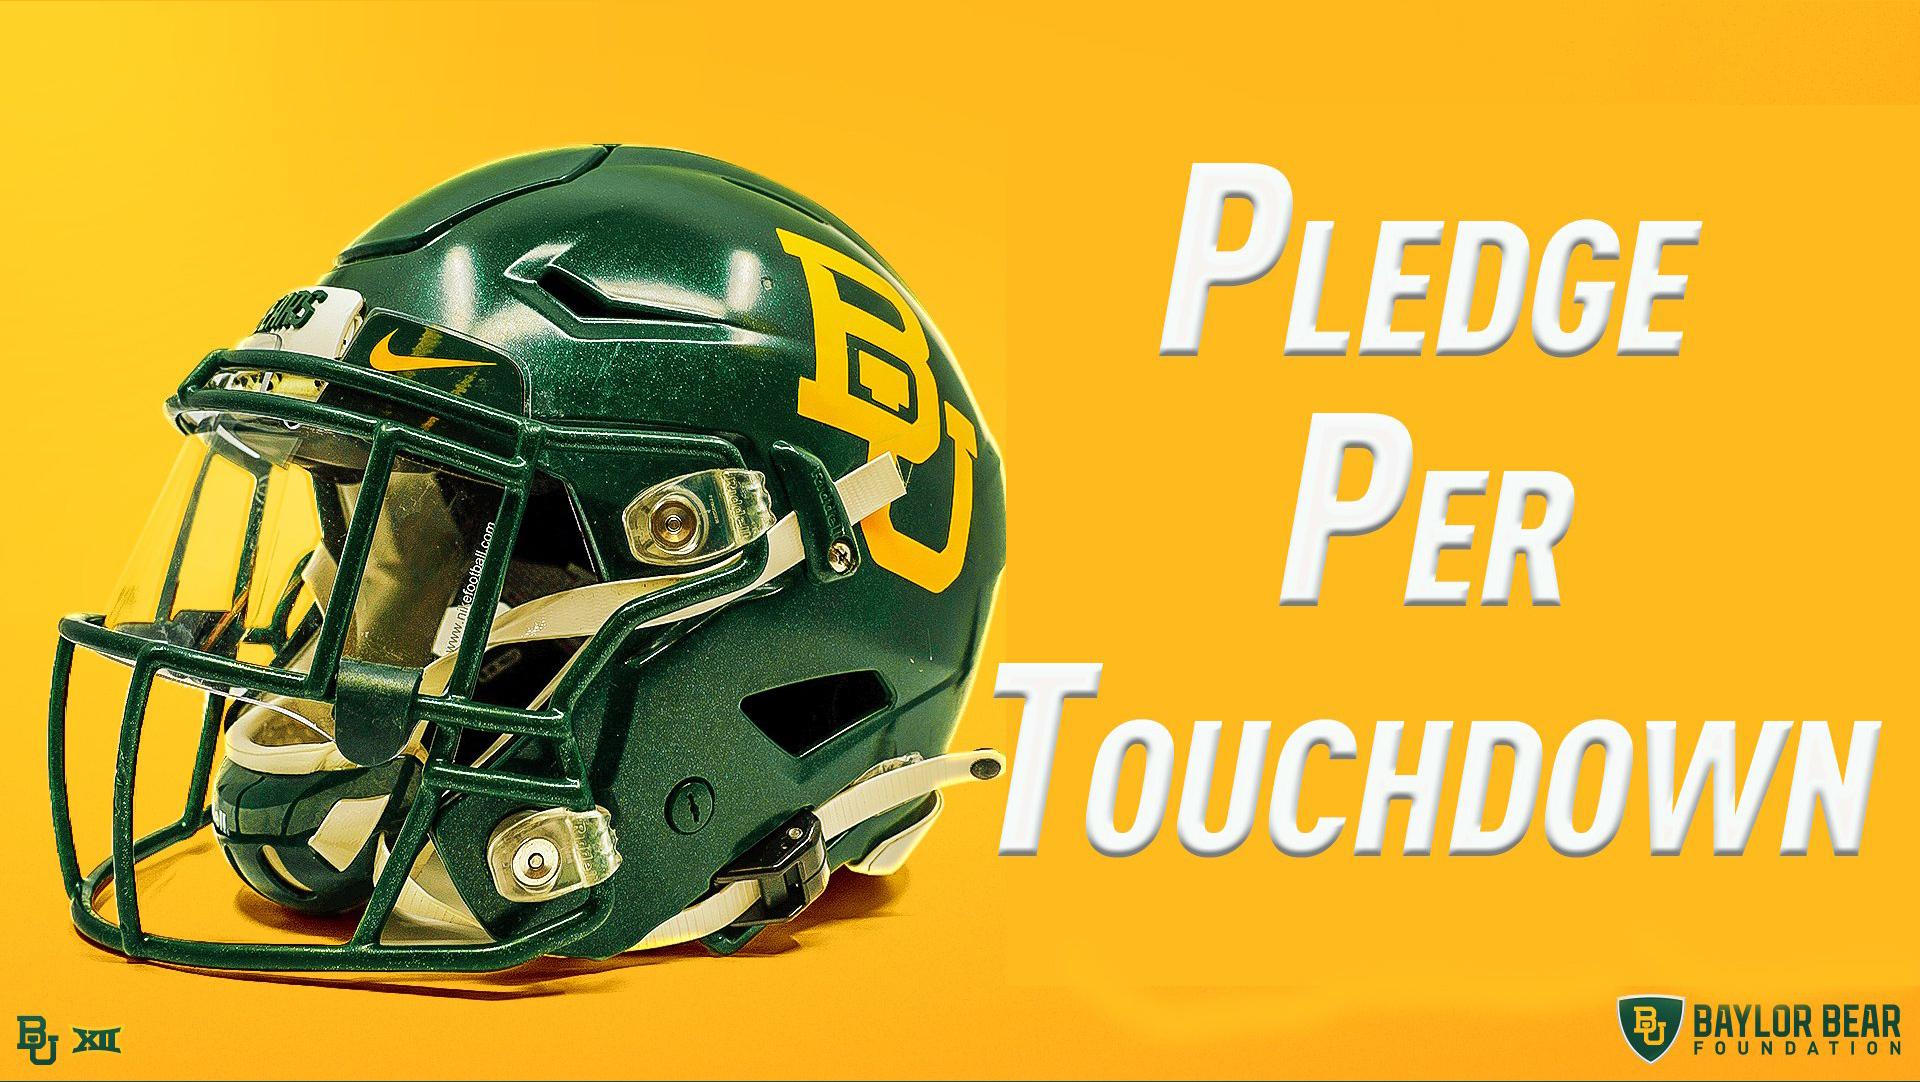 Pledge Per Touchdown